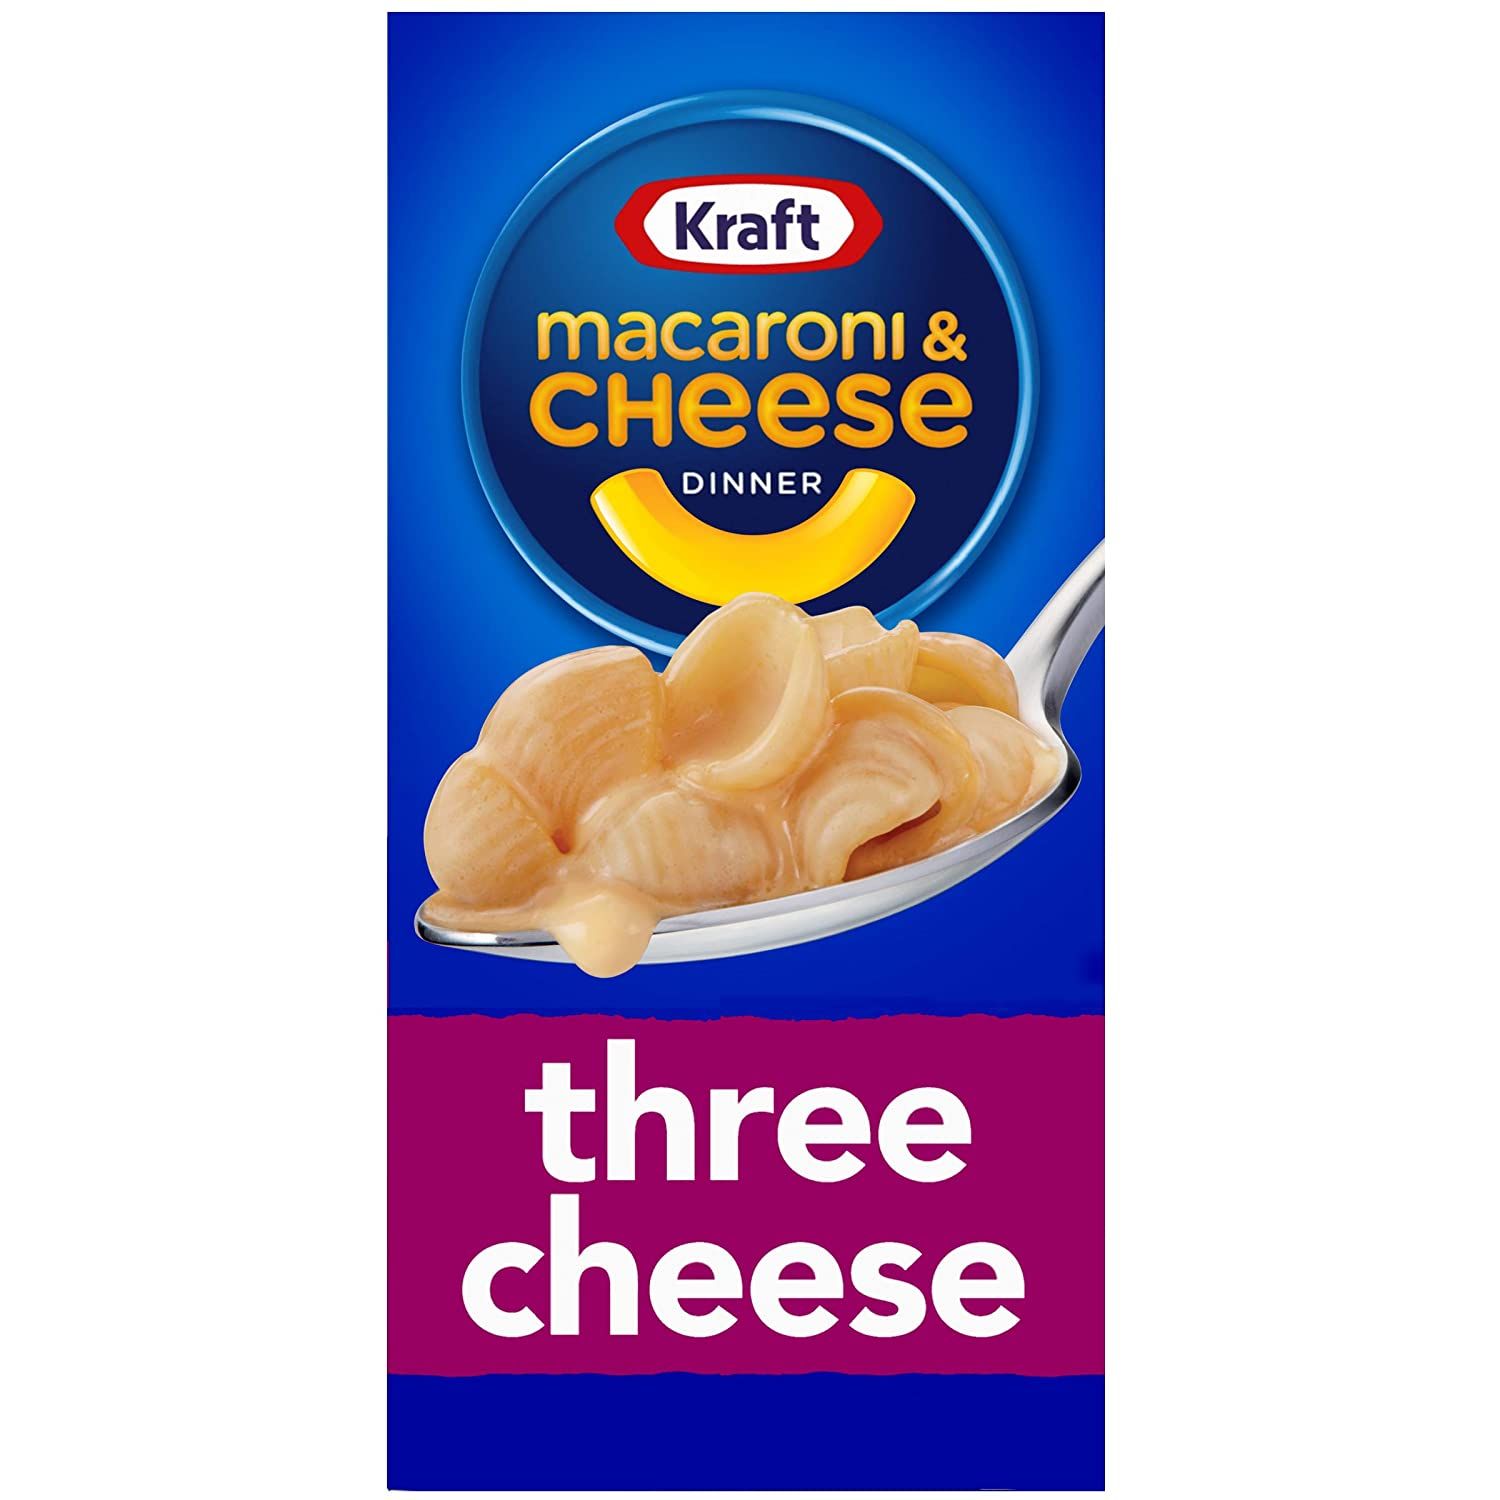 Kraft Macaroni And Cheese Dinner Image